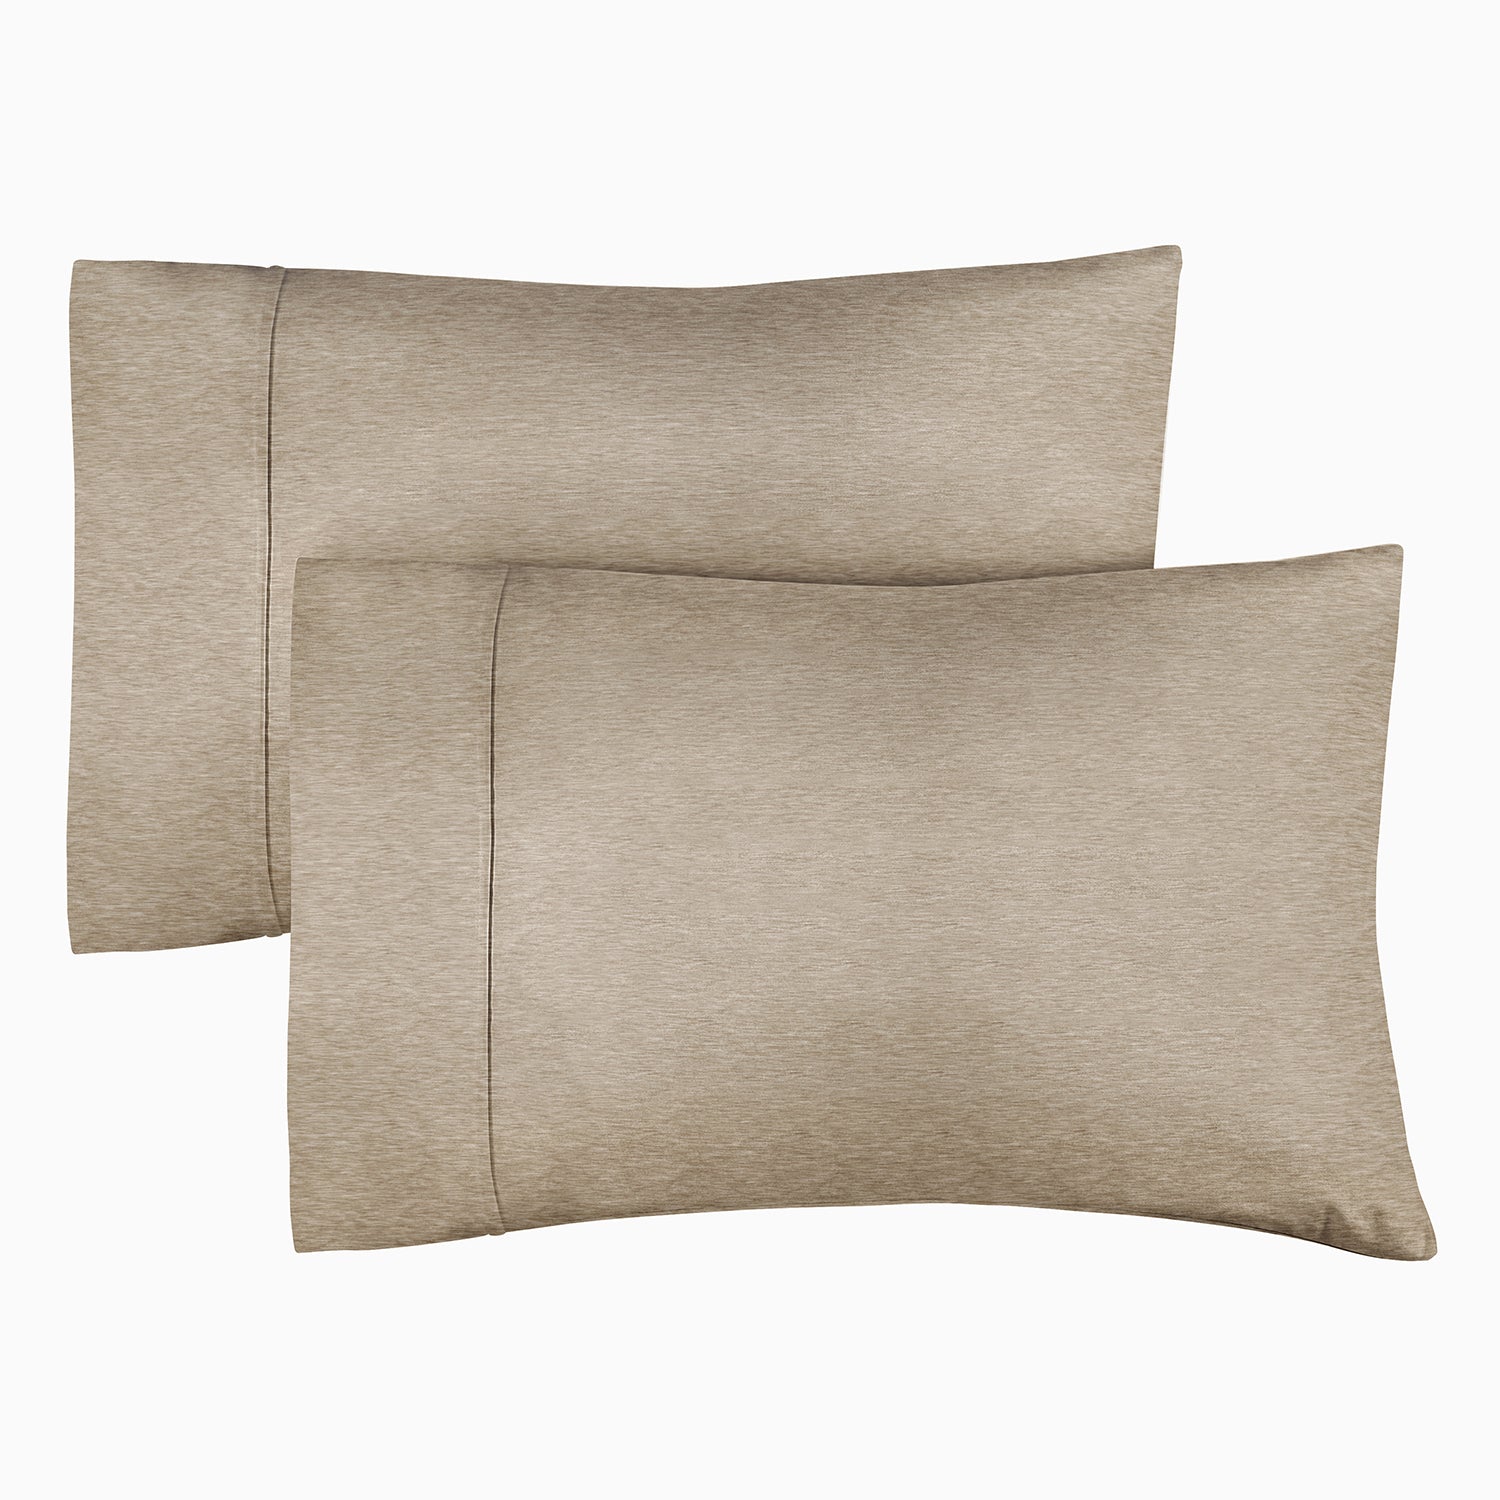 2 Pillowcase Set - Heathered Beige